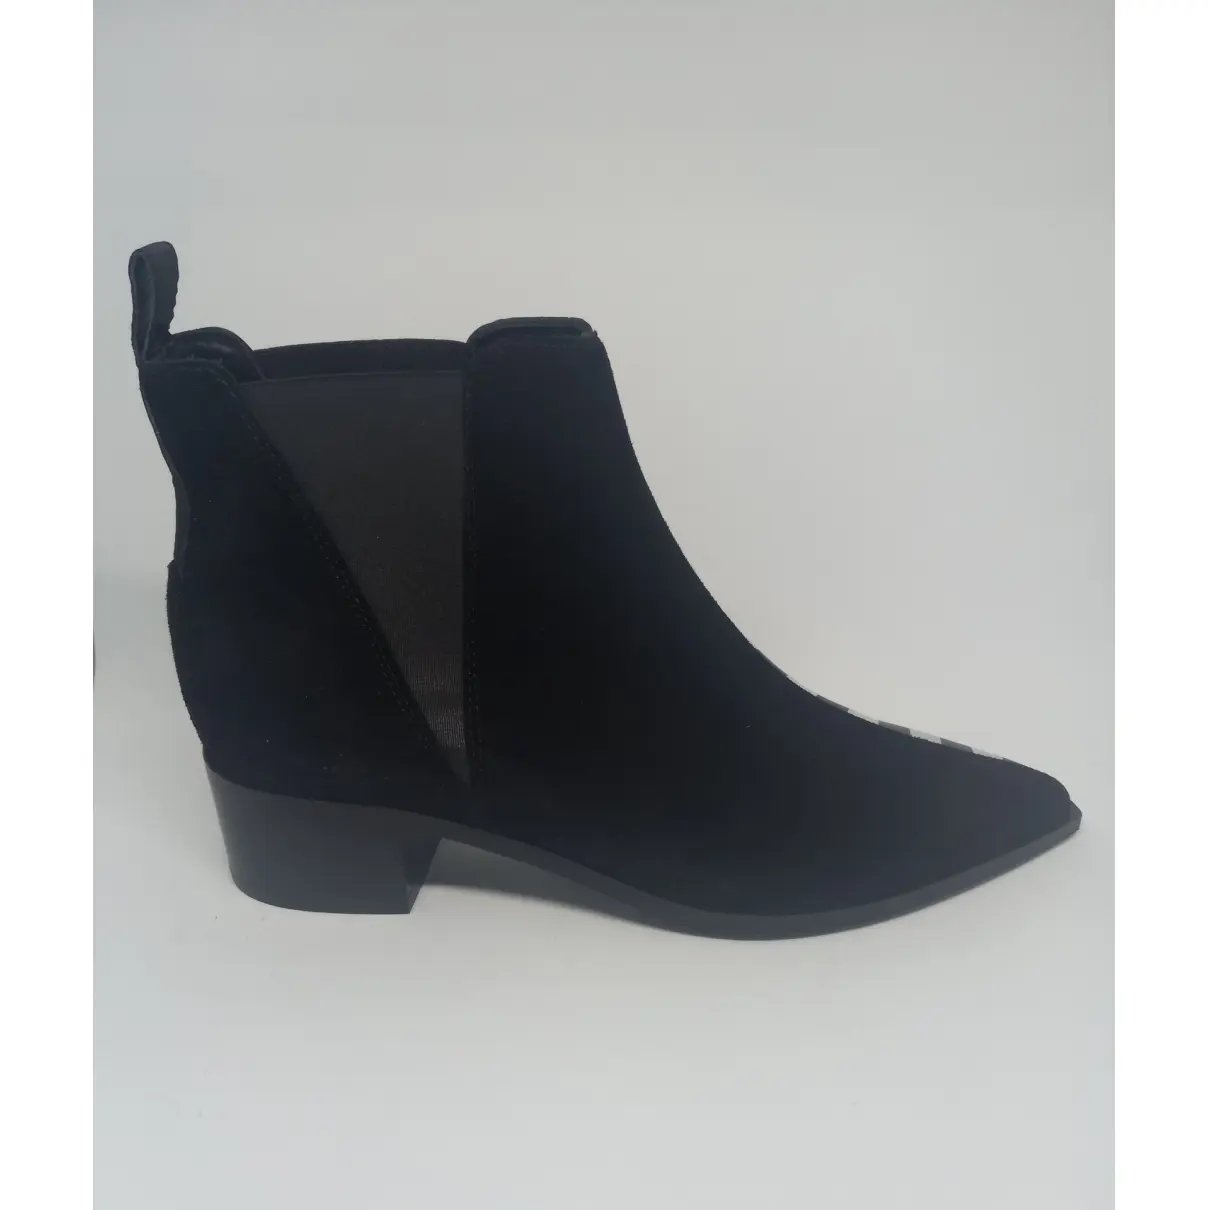 Buy Acne Studios Jensen / Jenny ankle boots online